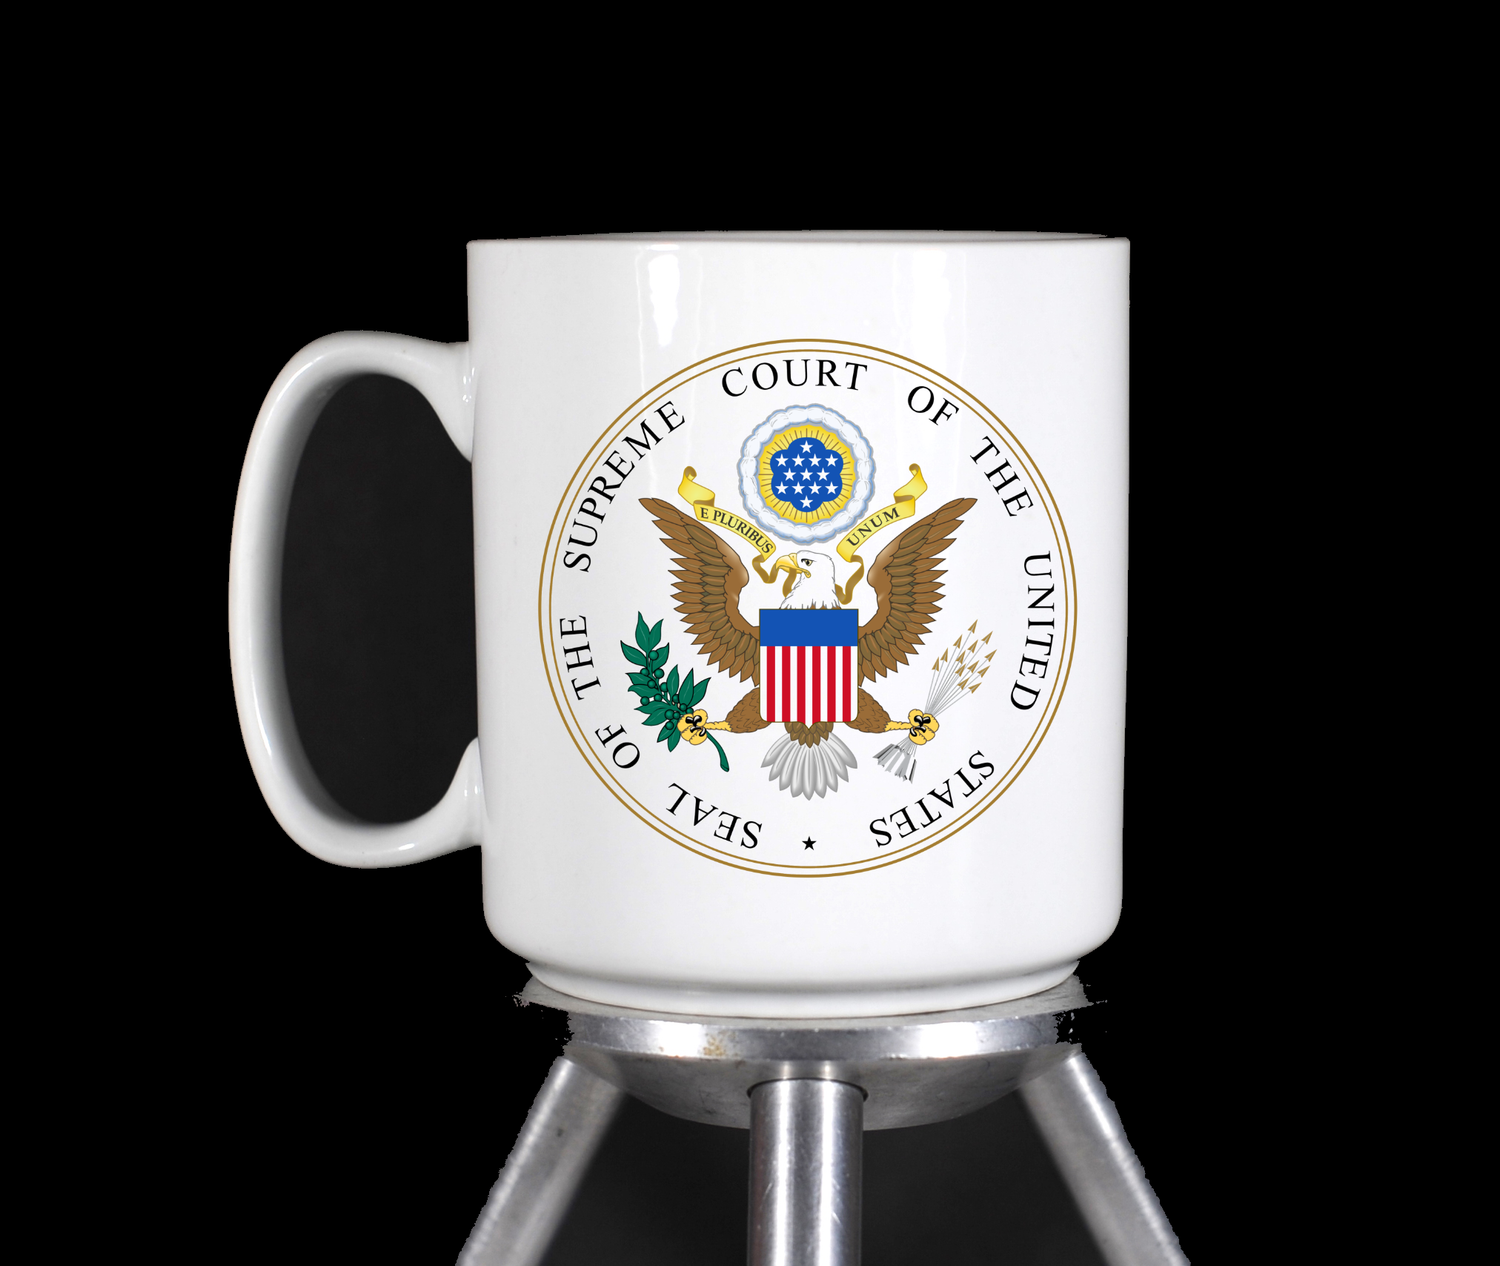 SCOTUS (Supreme Court Of The United States) Coffee Mug by TheGlassyLass.com